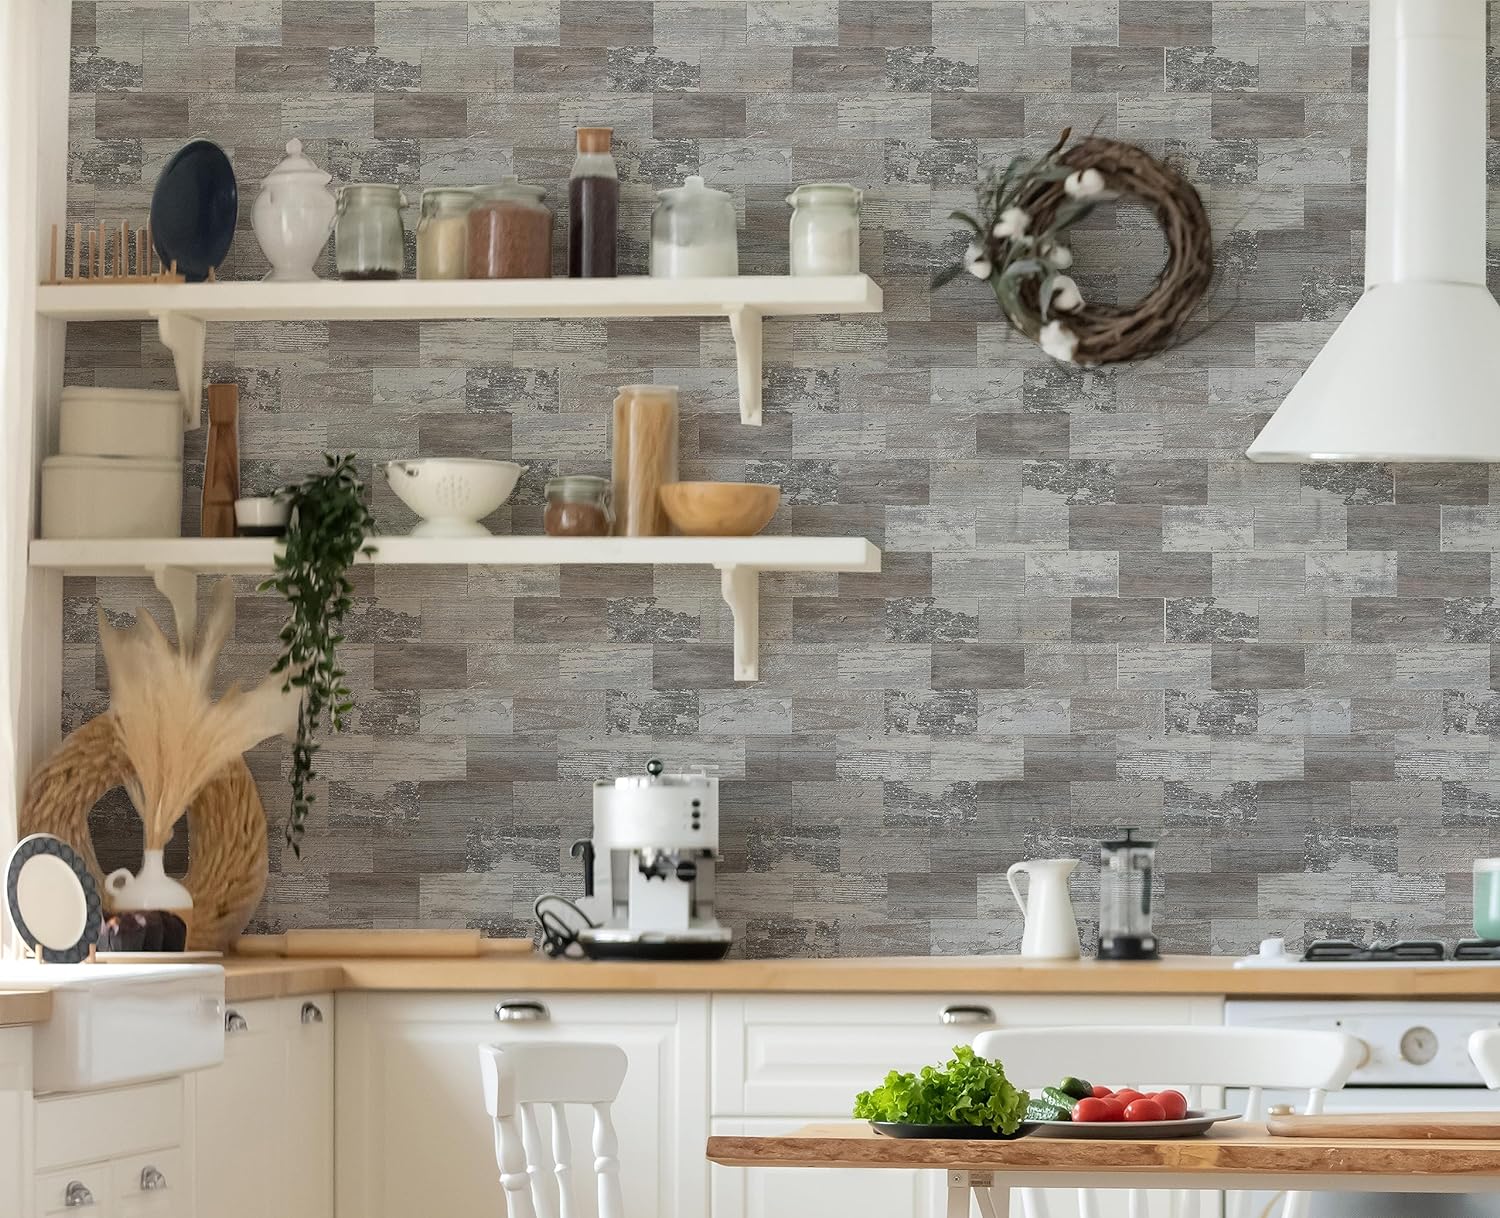 3" X 6"  PVC backsplash tile for kitchen in Light Rustic lifestyle image